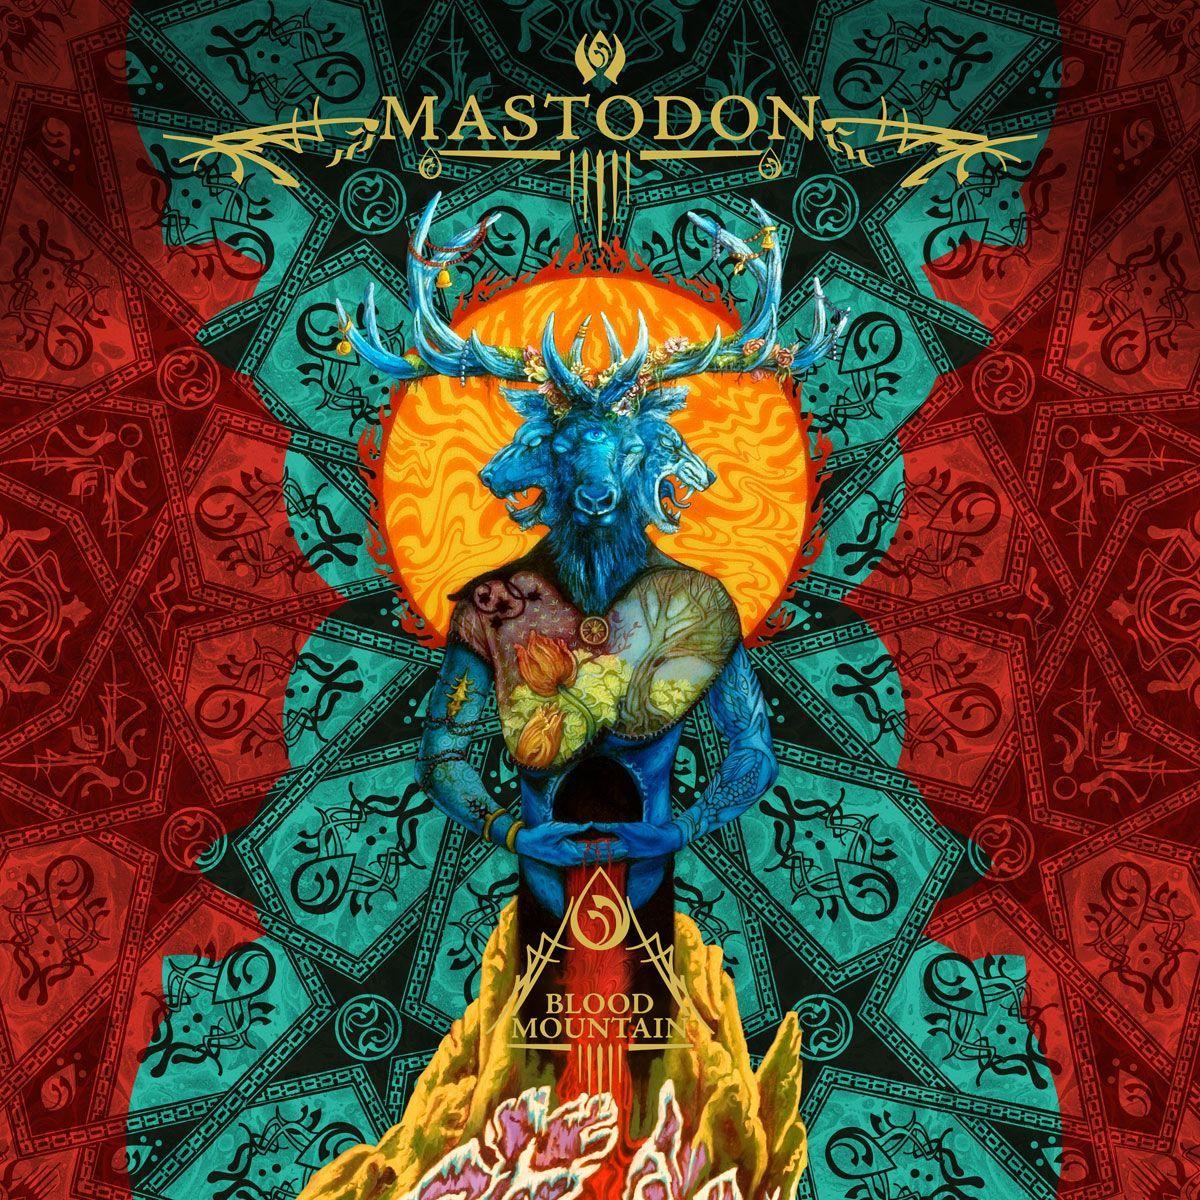 Found this beautiful alternate cover for Mastodon Blood Mountain